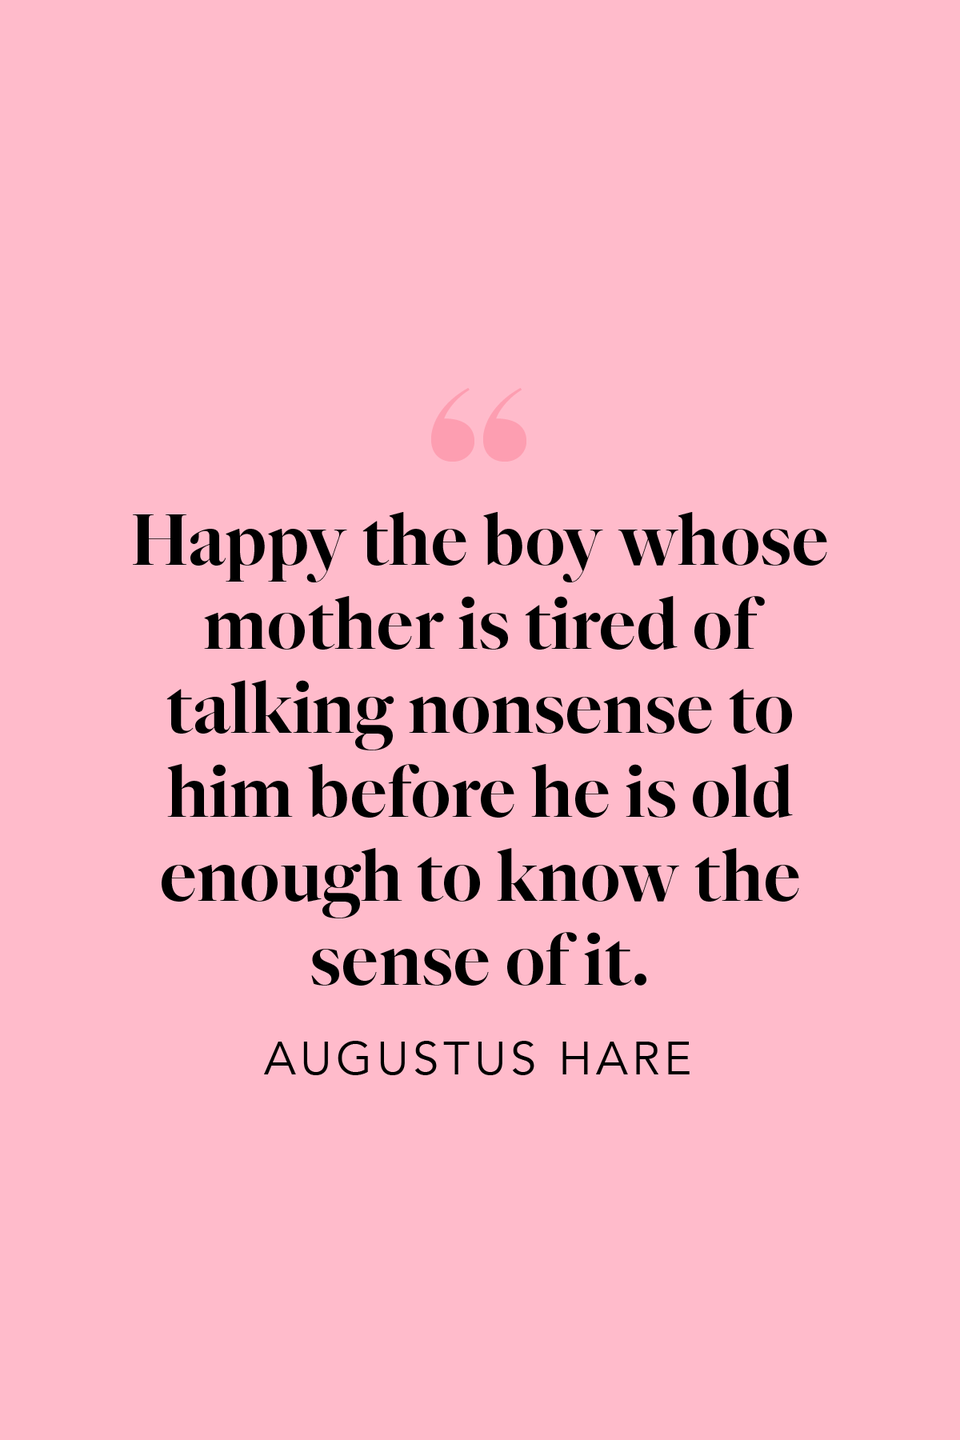 Augustus Hare